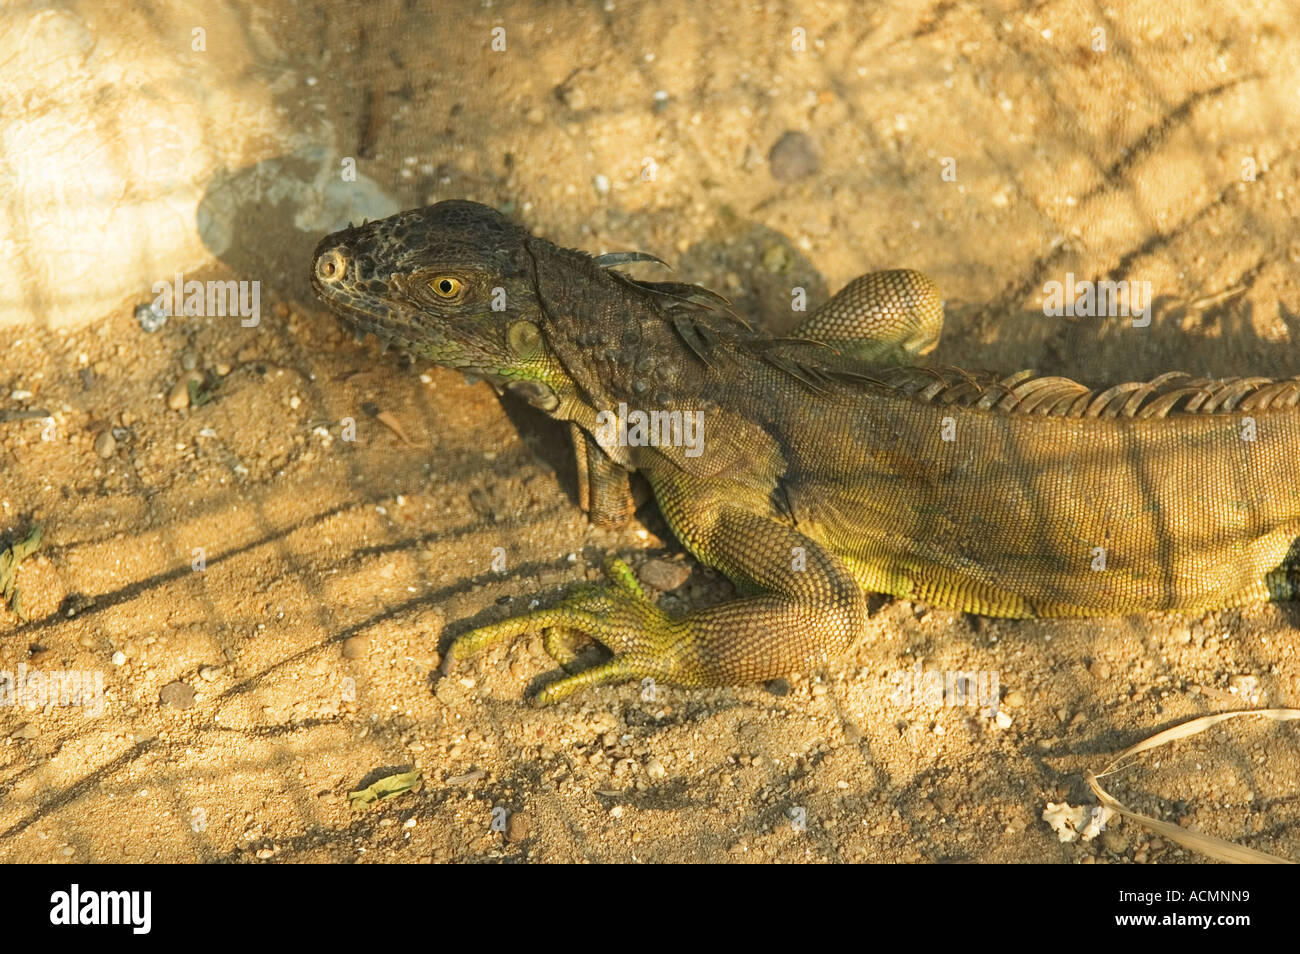 Lizard lying in the sand Stock Photo